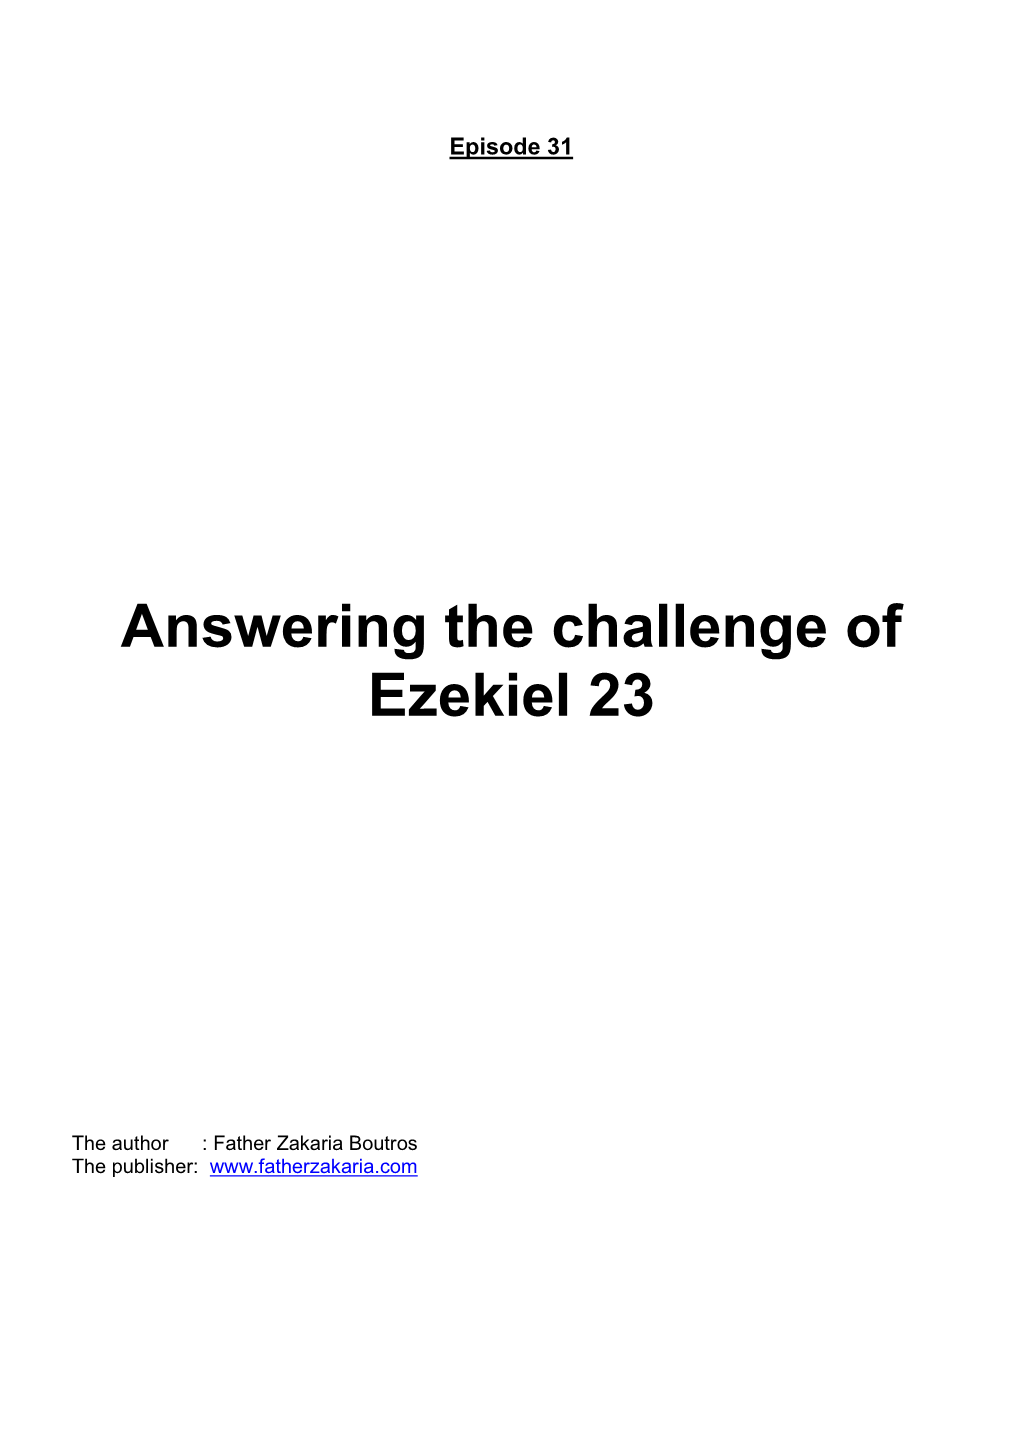 Answering the Challenge of Ezekiel 23